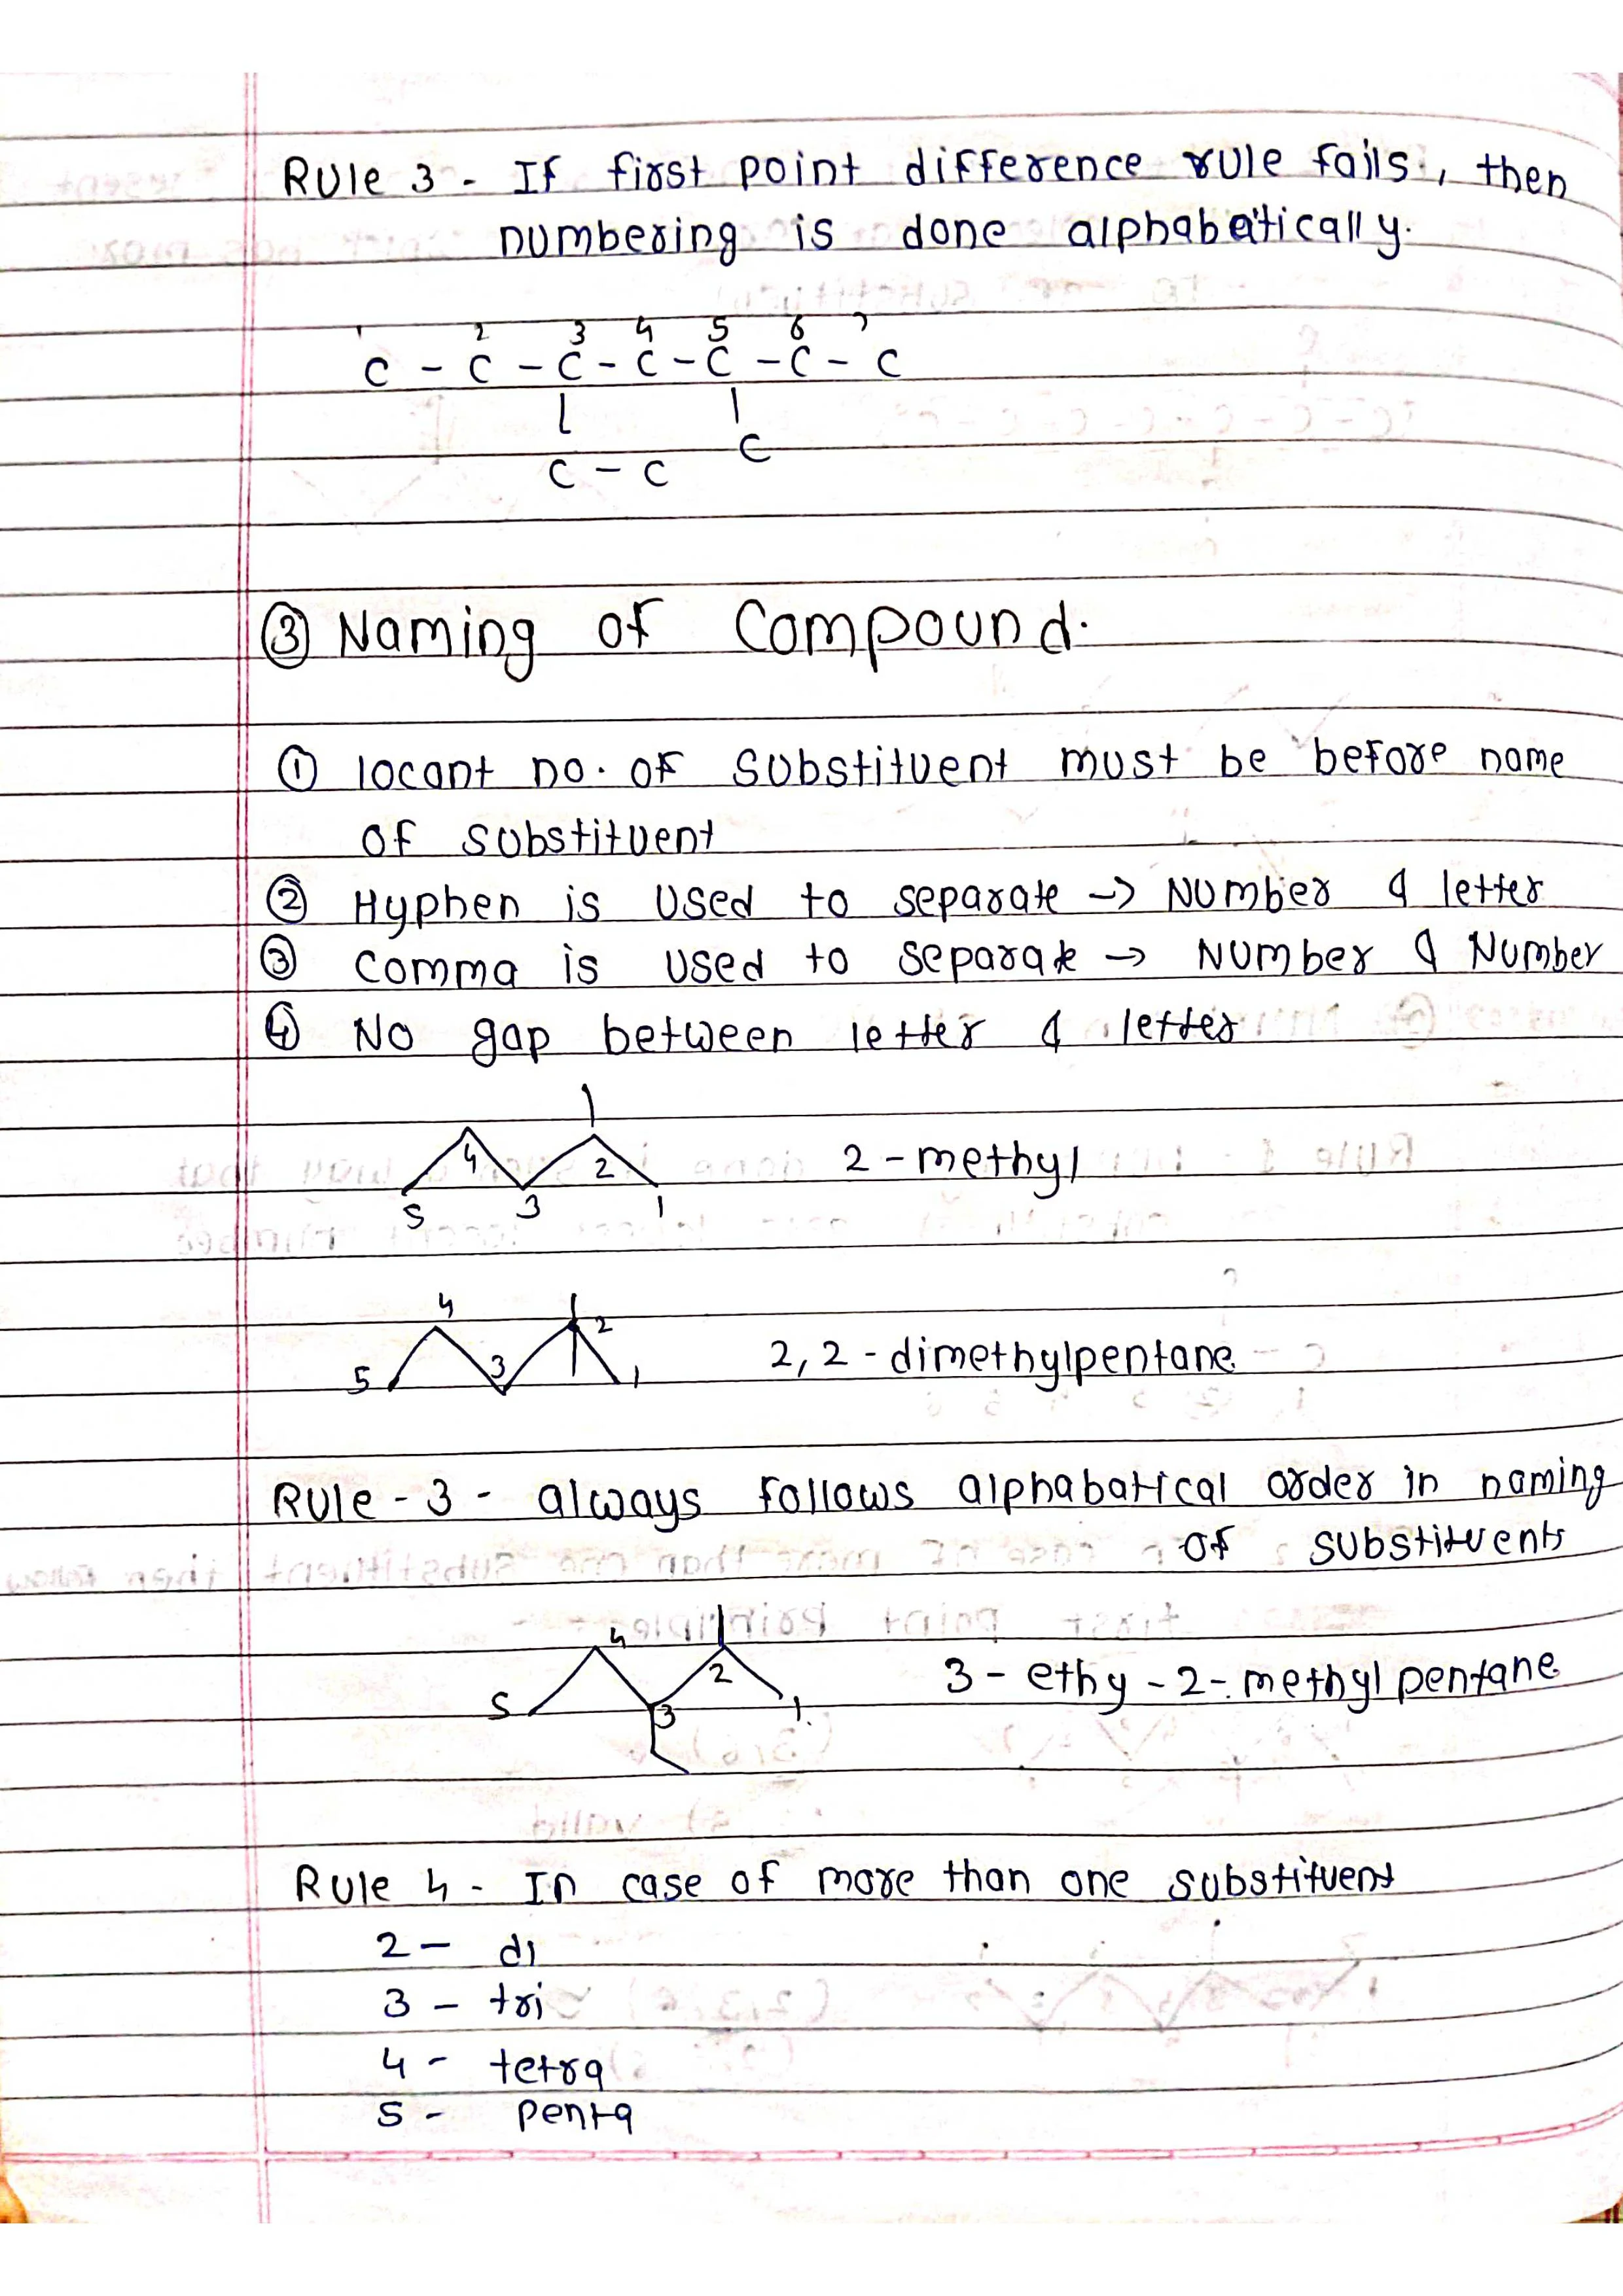 IUPAC Nomenclature - Chemistry Short Notes 📚